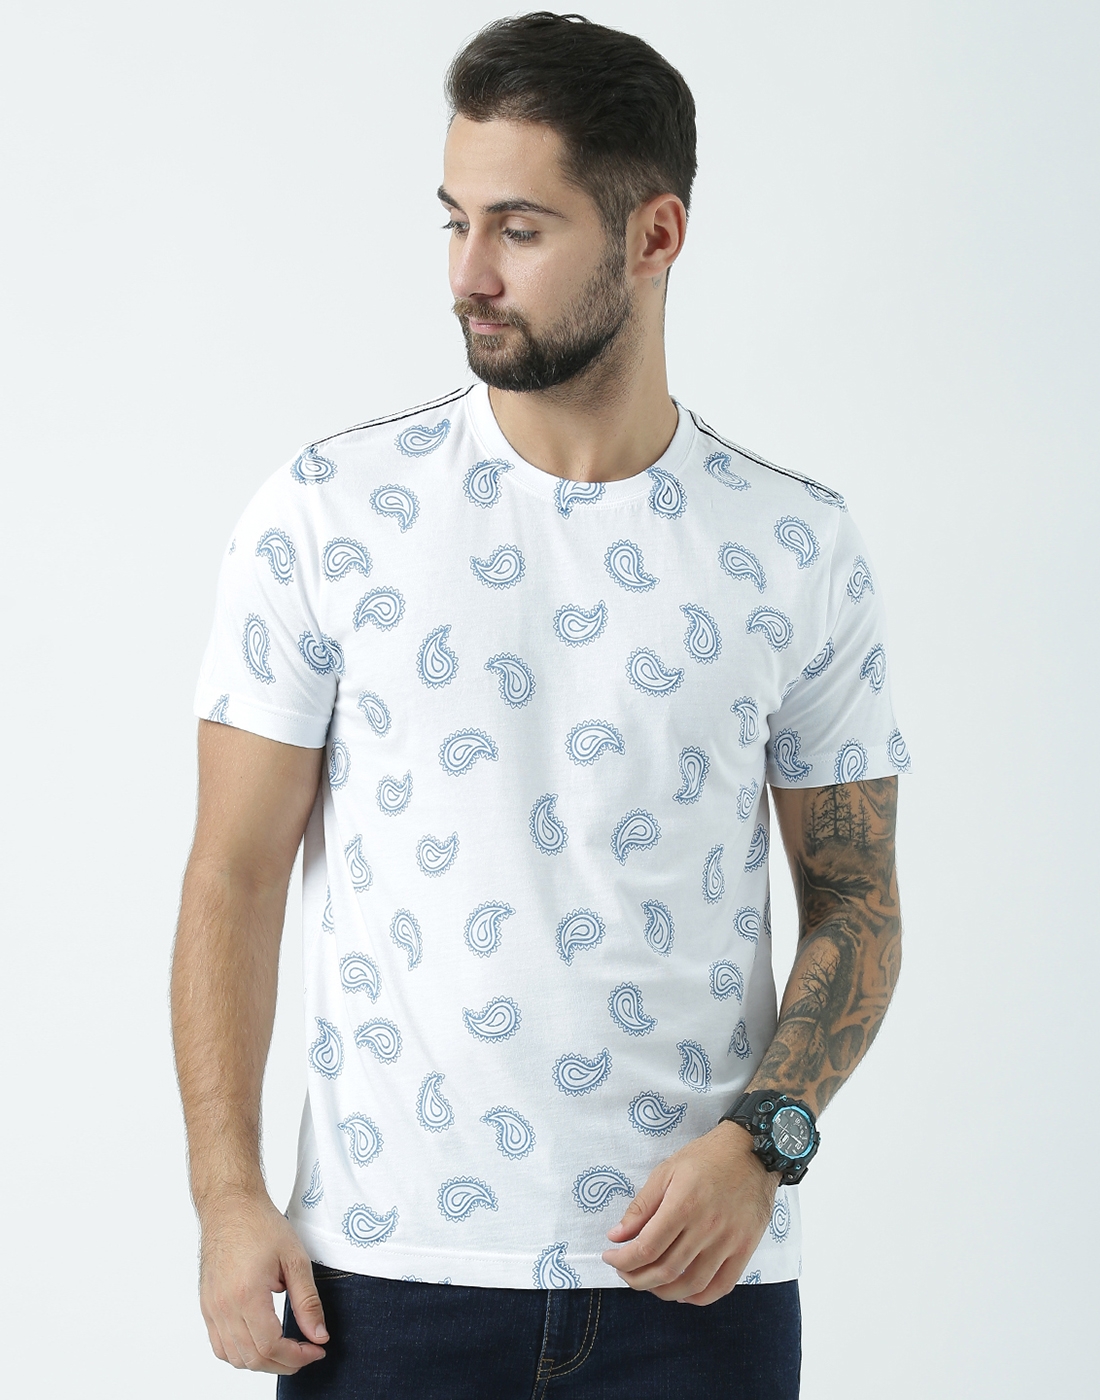 Huetrap Men's Graphic Round Neck Short Sleeve White T-Shirt